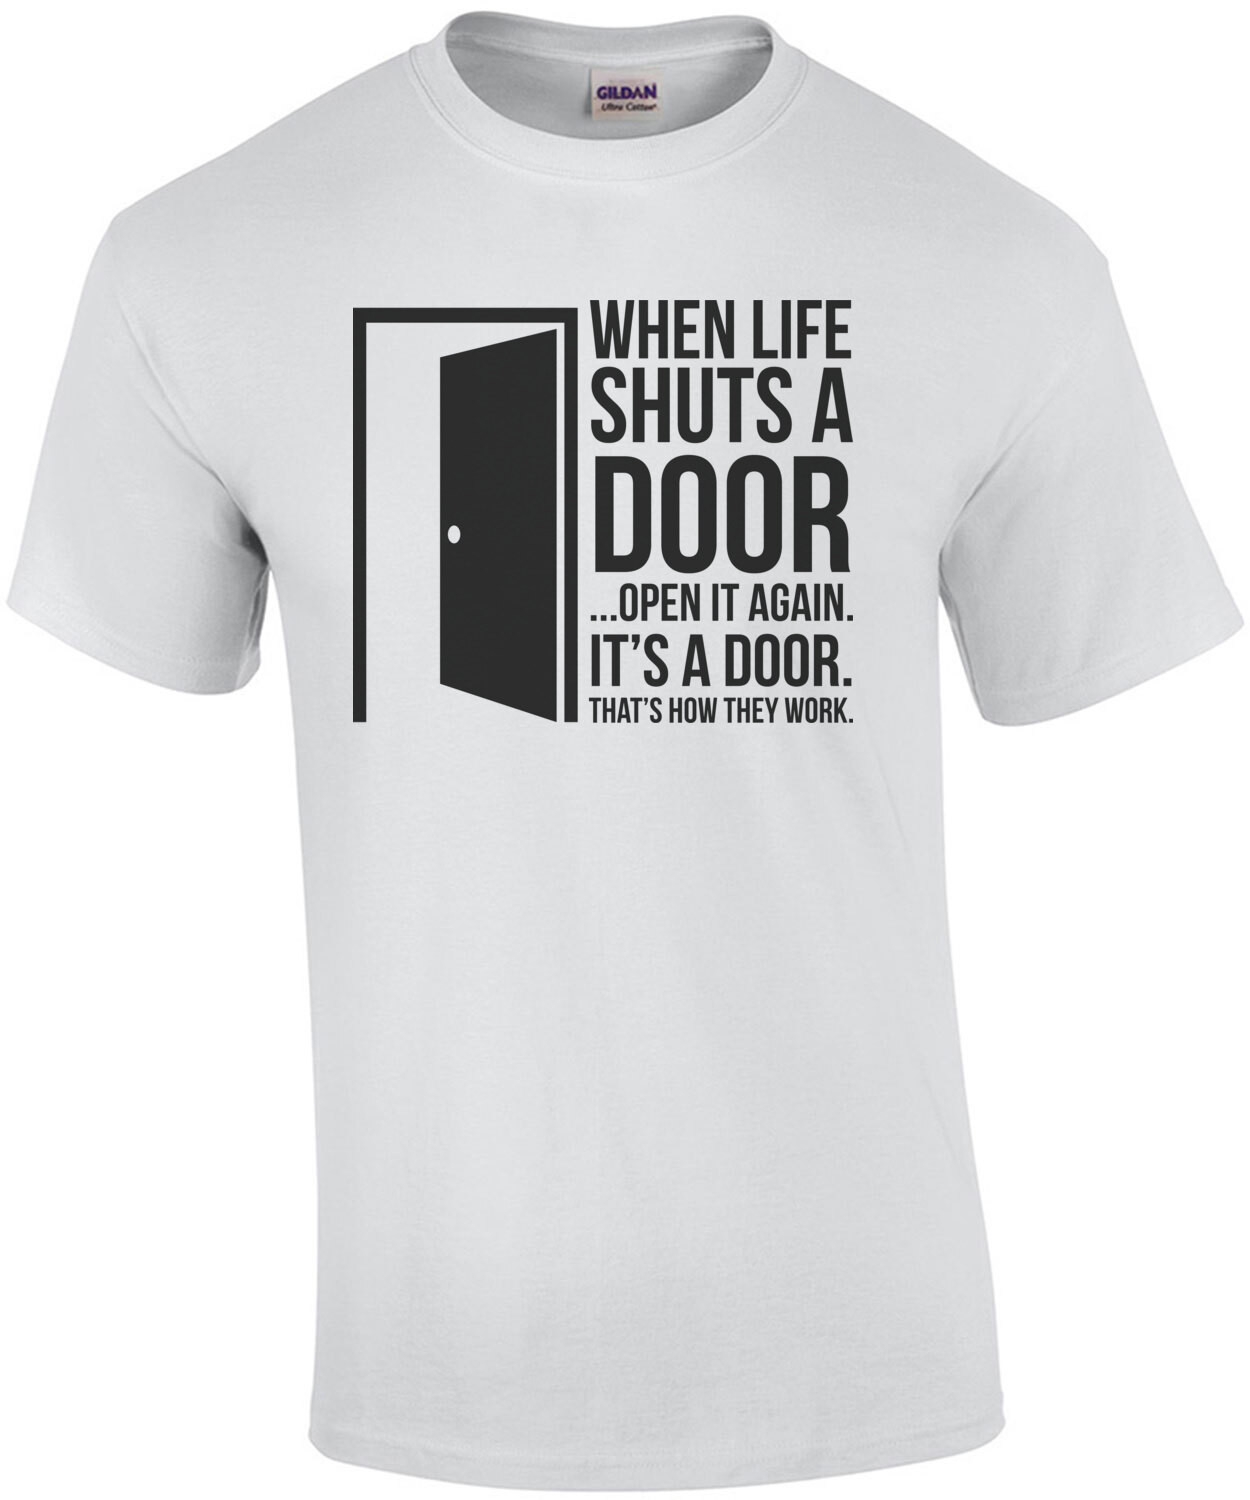 When life shuts a door... open it again. It's a door. That's how they work. Sarcastic T-Shirt